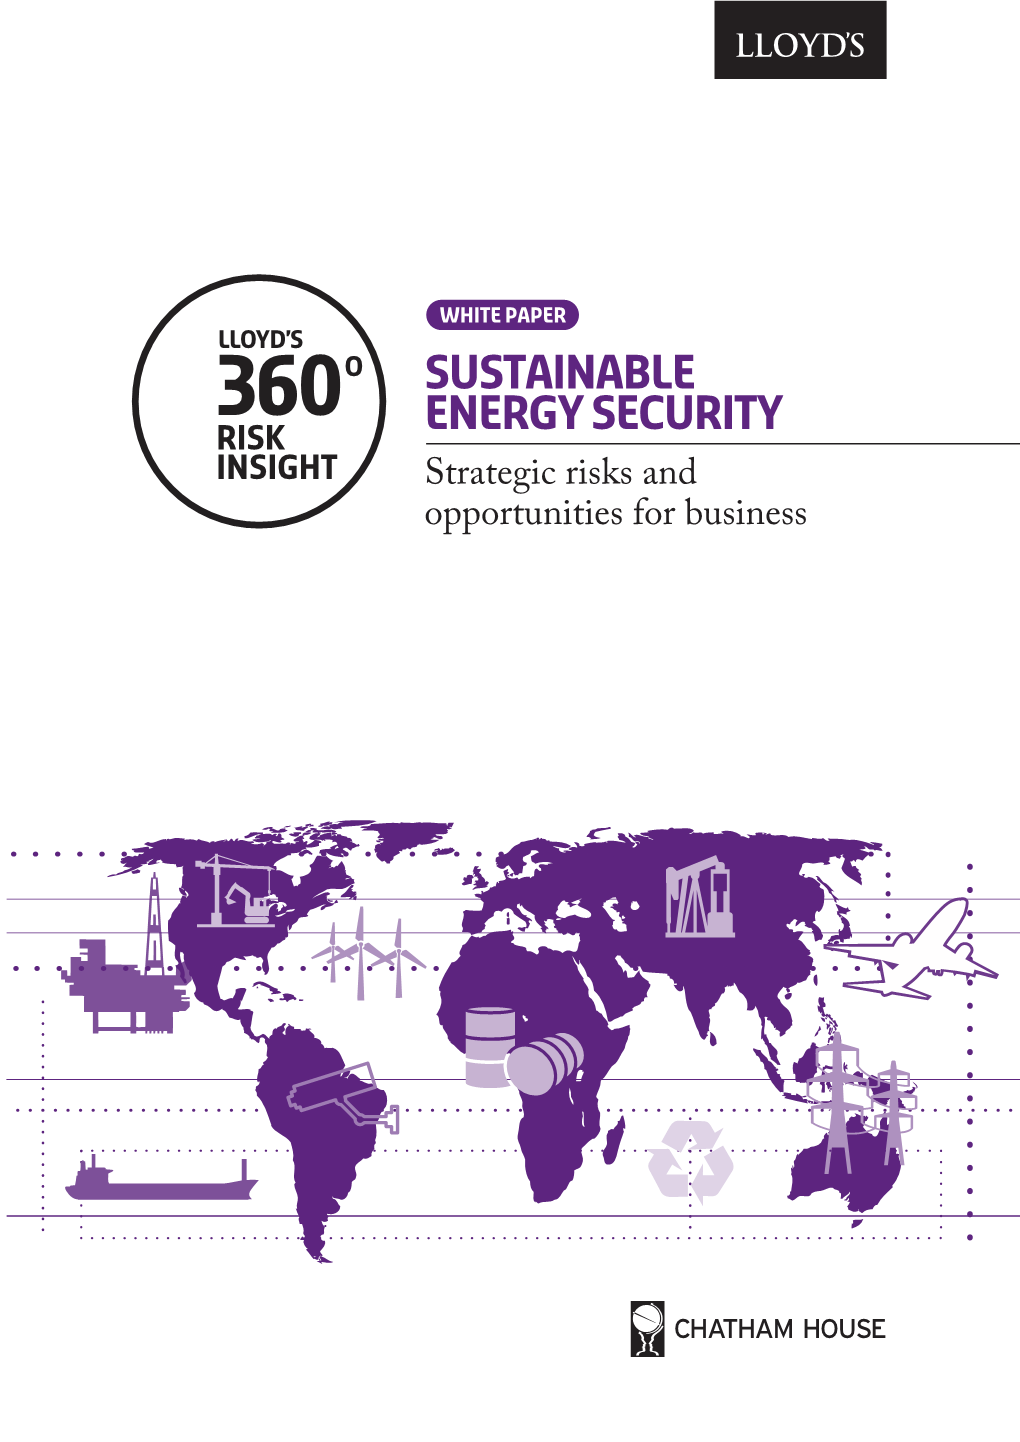 Lloyd's 360° Risk Insight Sustainable Energy Security